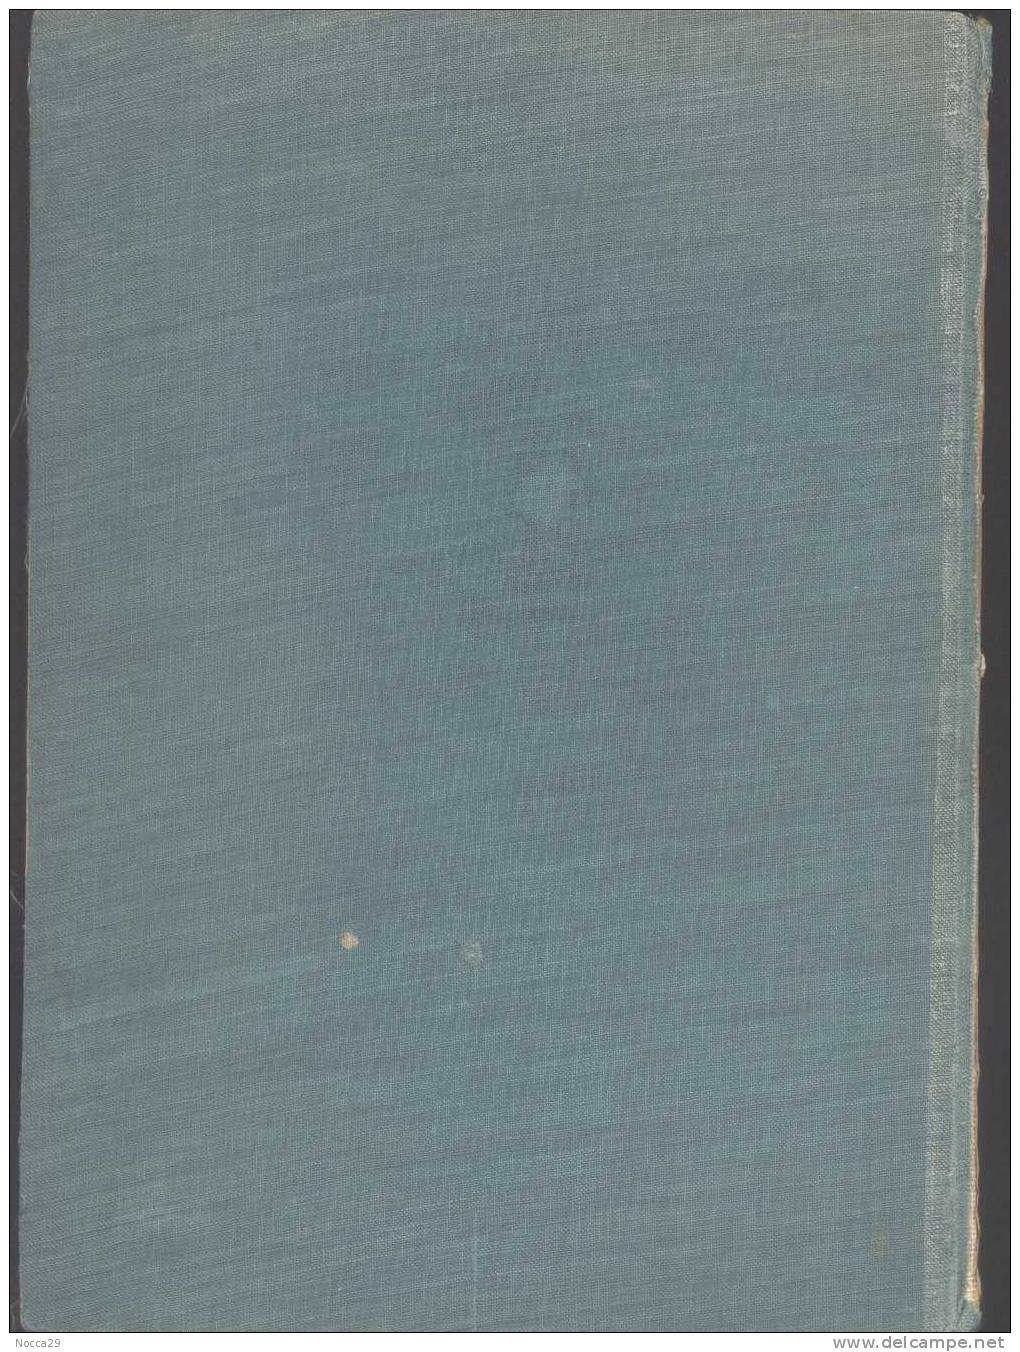 AUF KUNDFAHRT IM JMALAJA - 1937 - SPEDIZIONE SULL'HYMALAIA - ALPINISMO. ORIGINALE! - Biographies & Mémoires